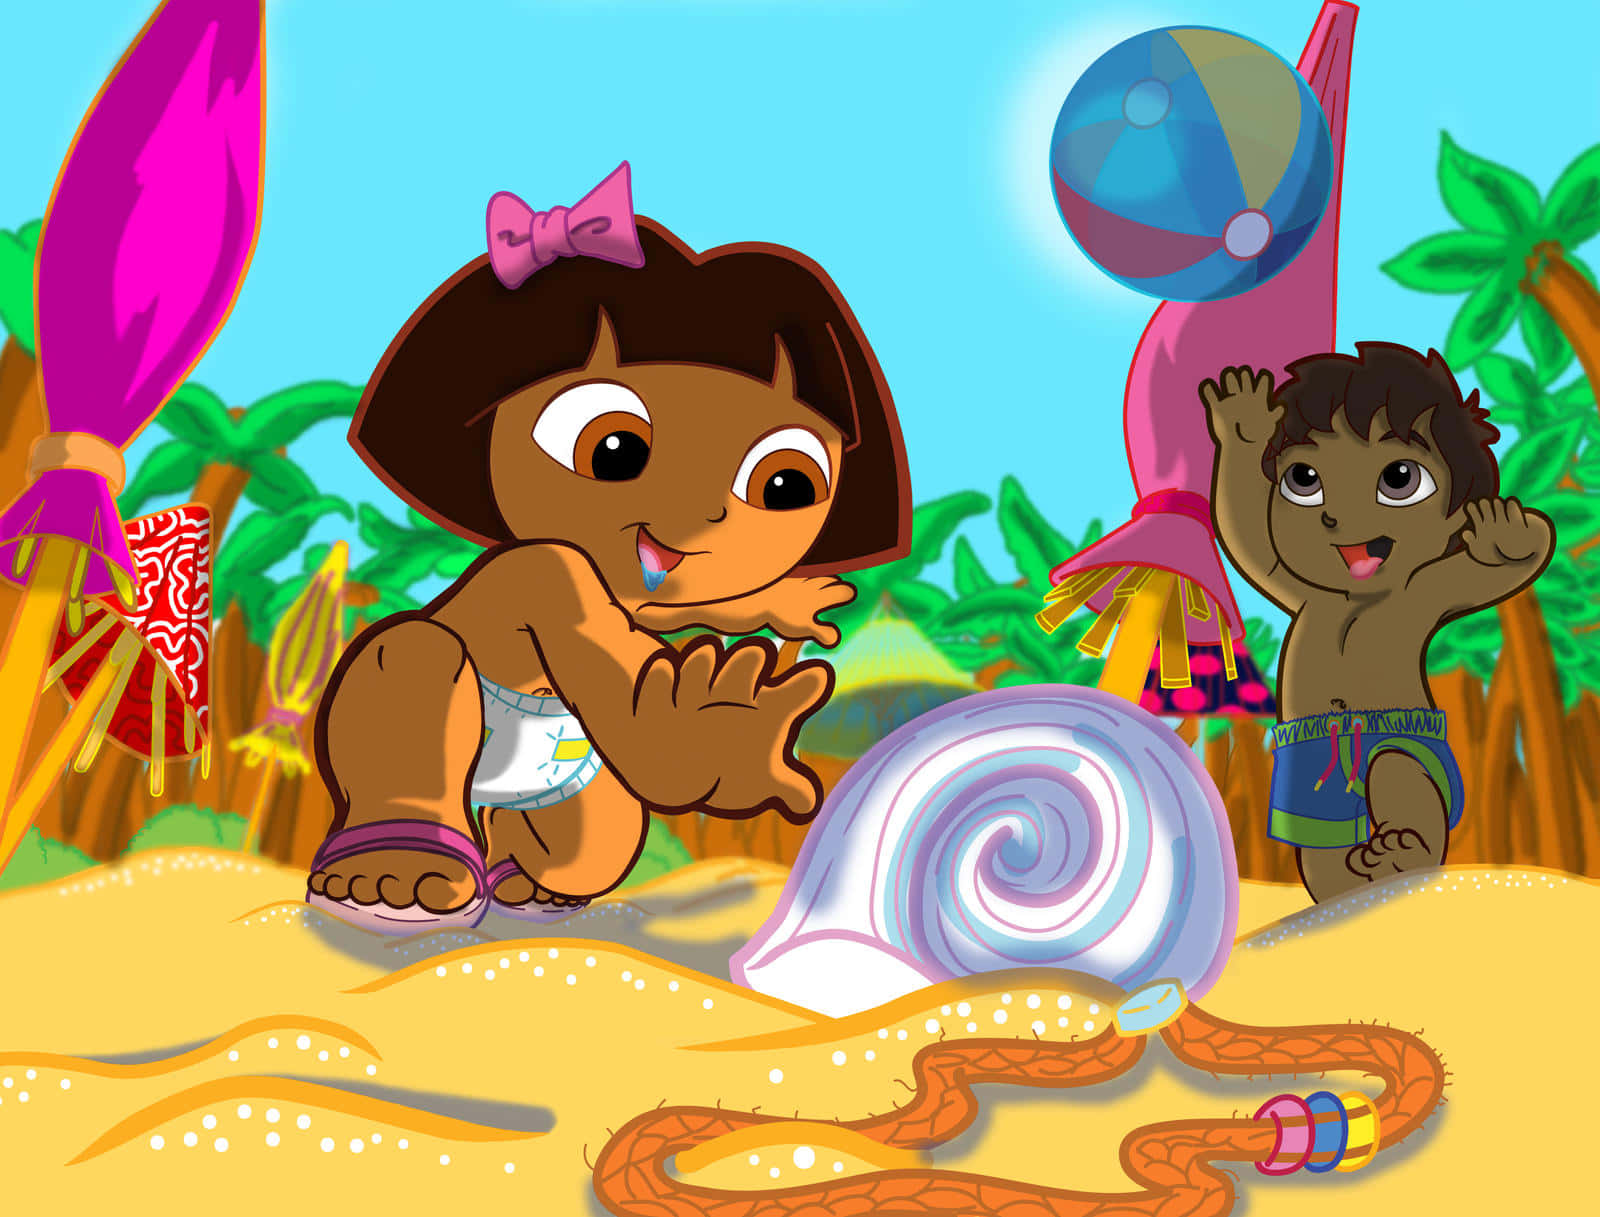 Join Dora on her adventures!